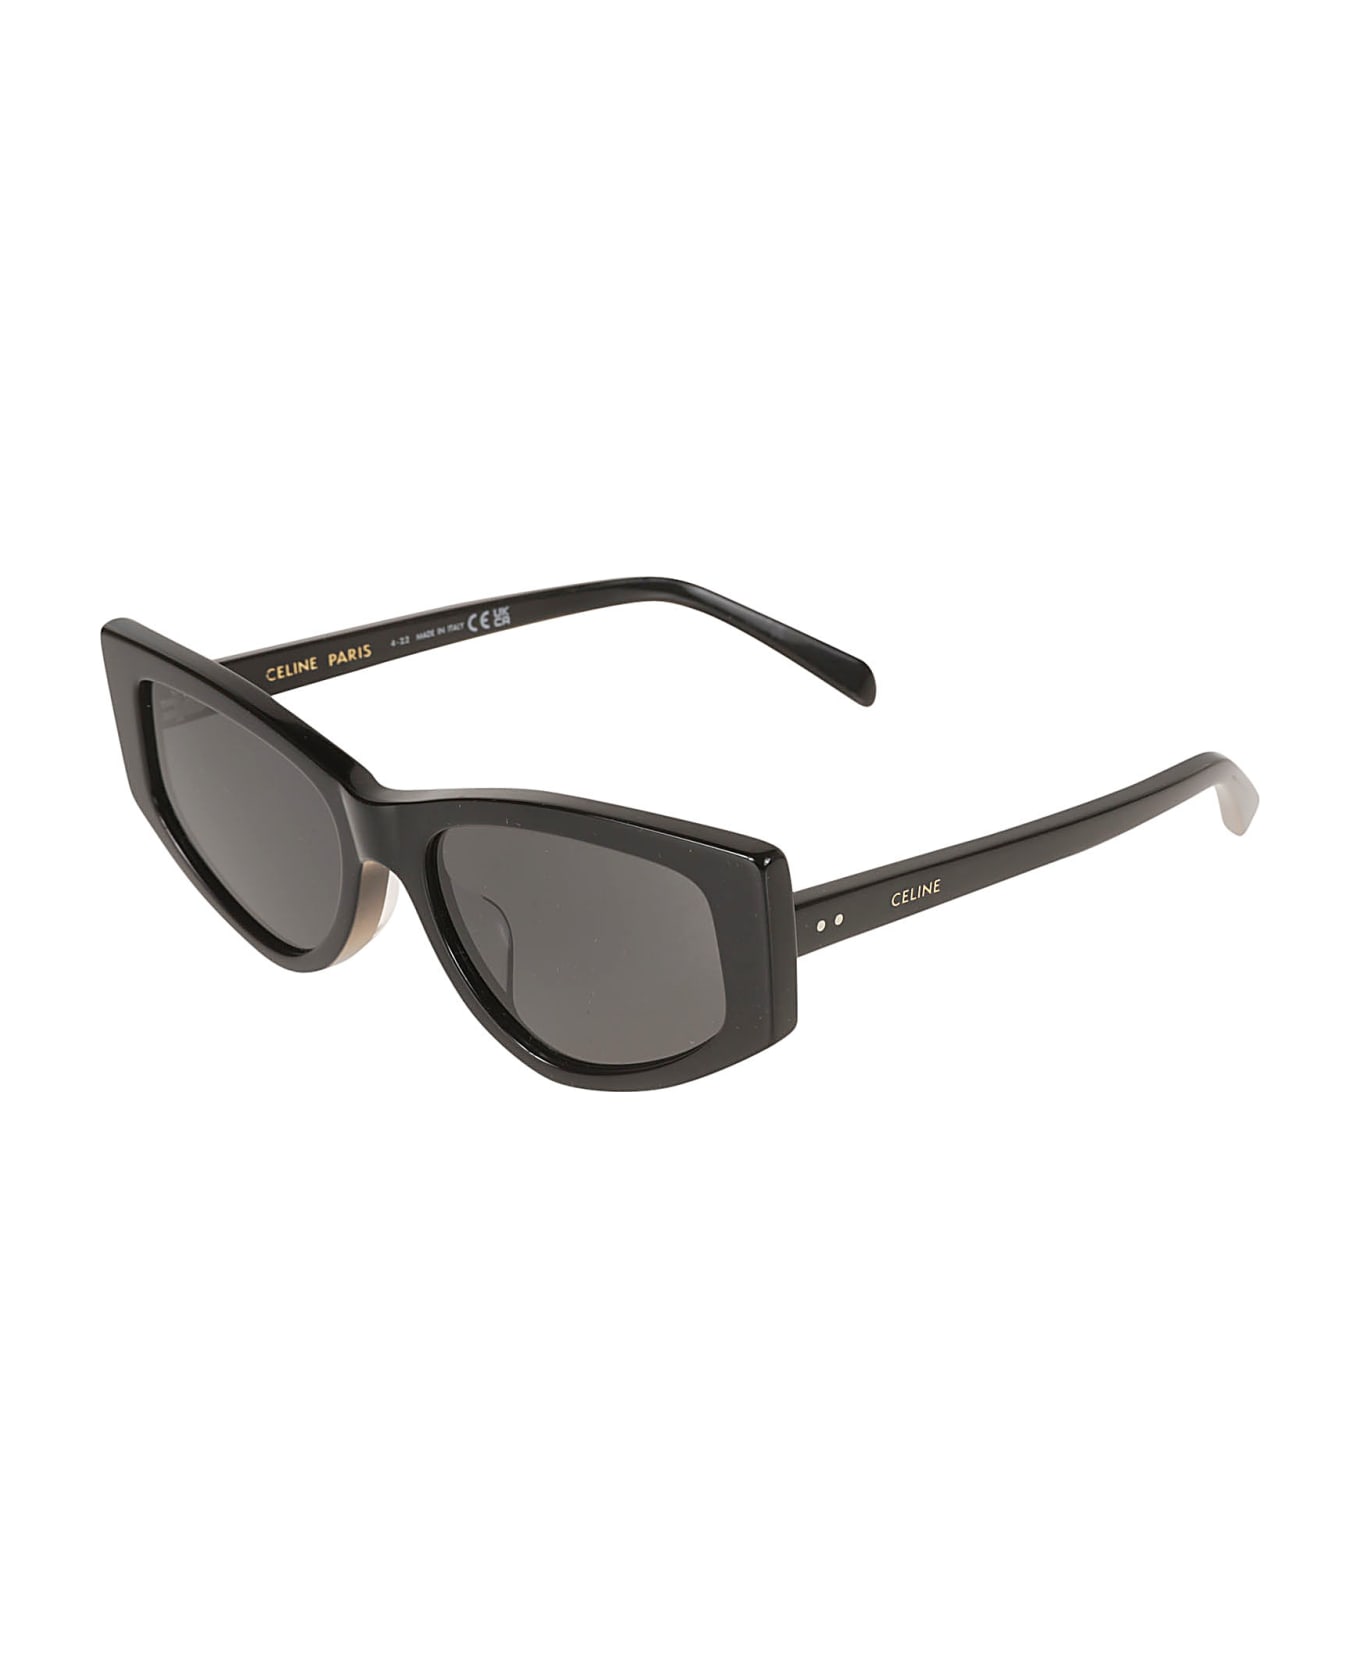 Celine Curve Square Sunglasses - Black